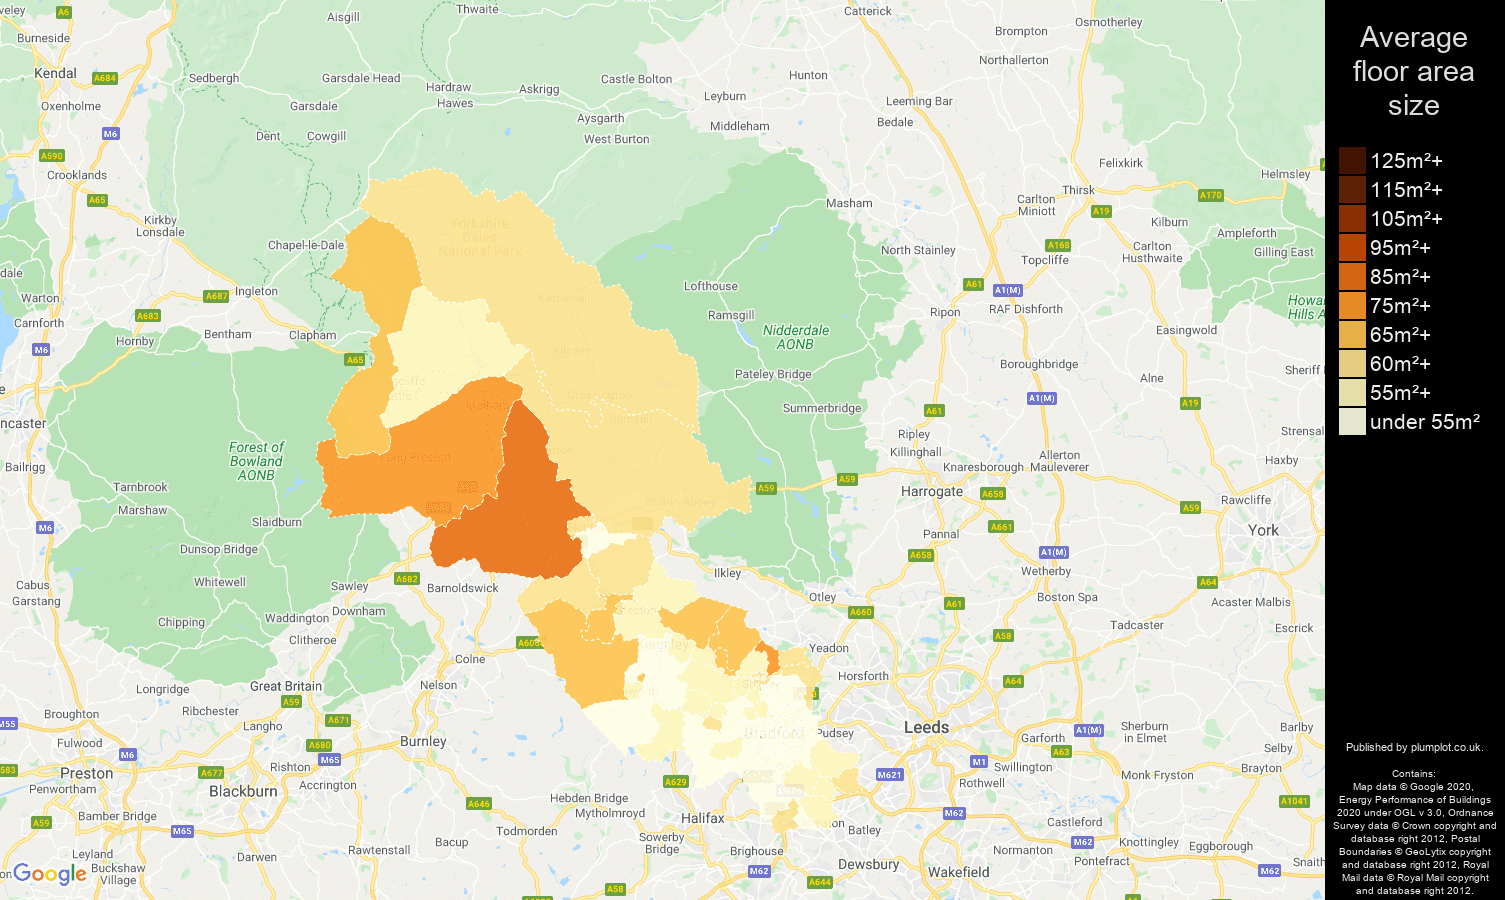 Bradford map of average floor area size of flats